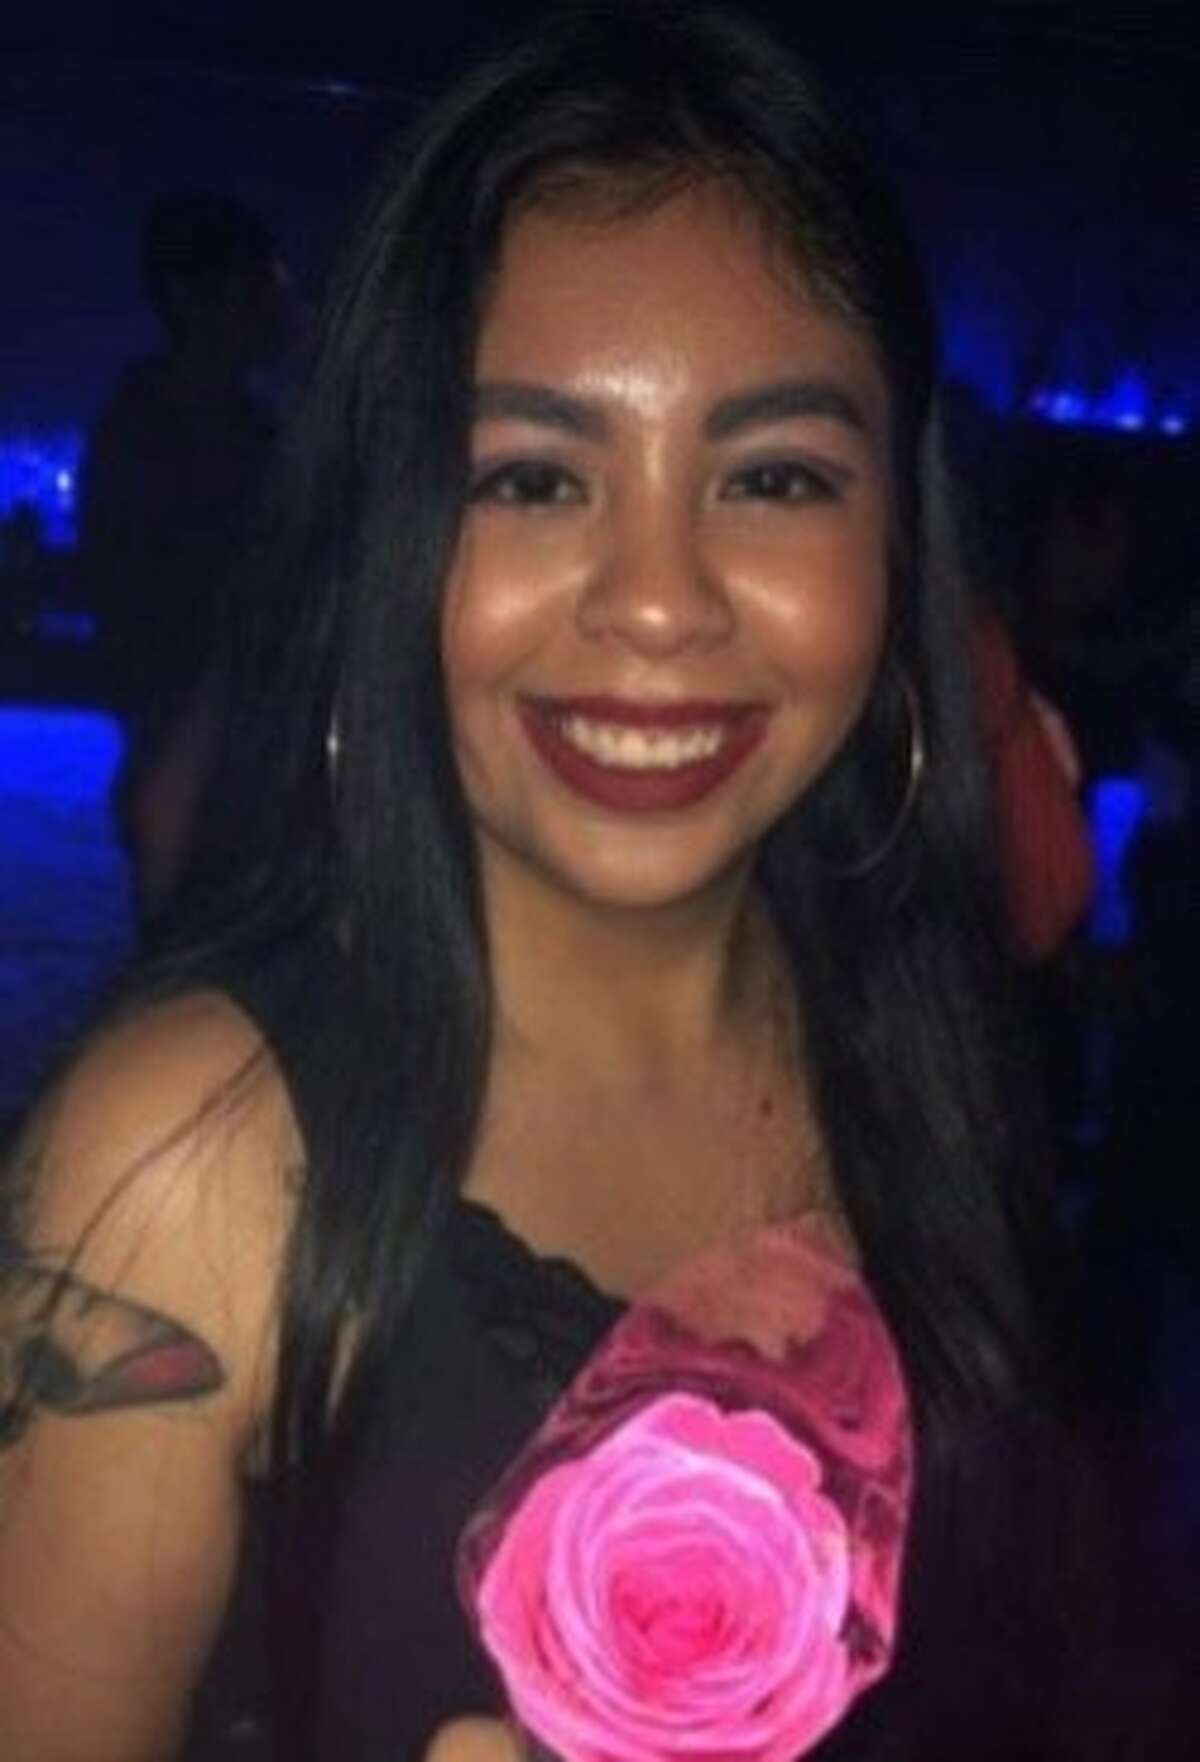 Missing Laredo woman found dead, suspect arrested